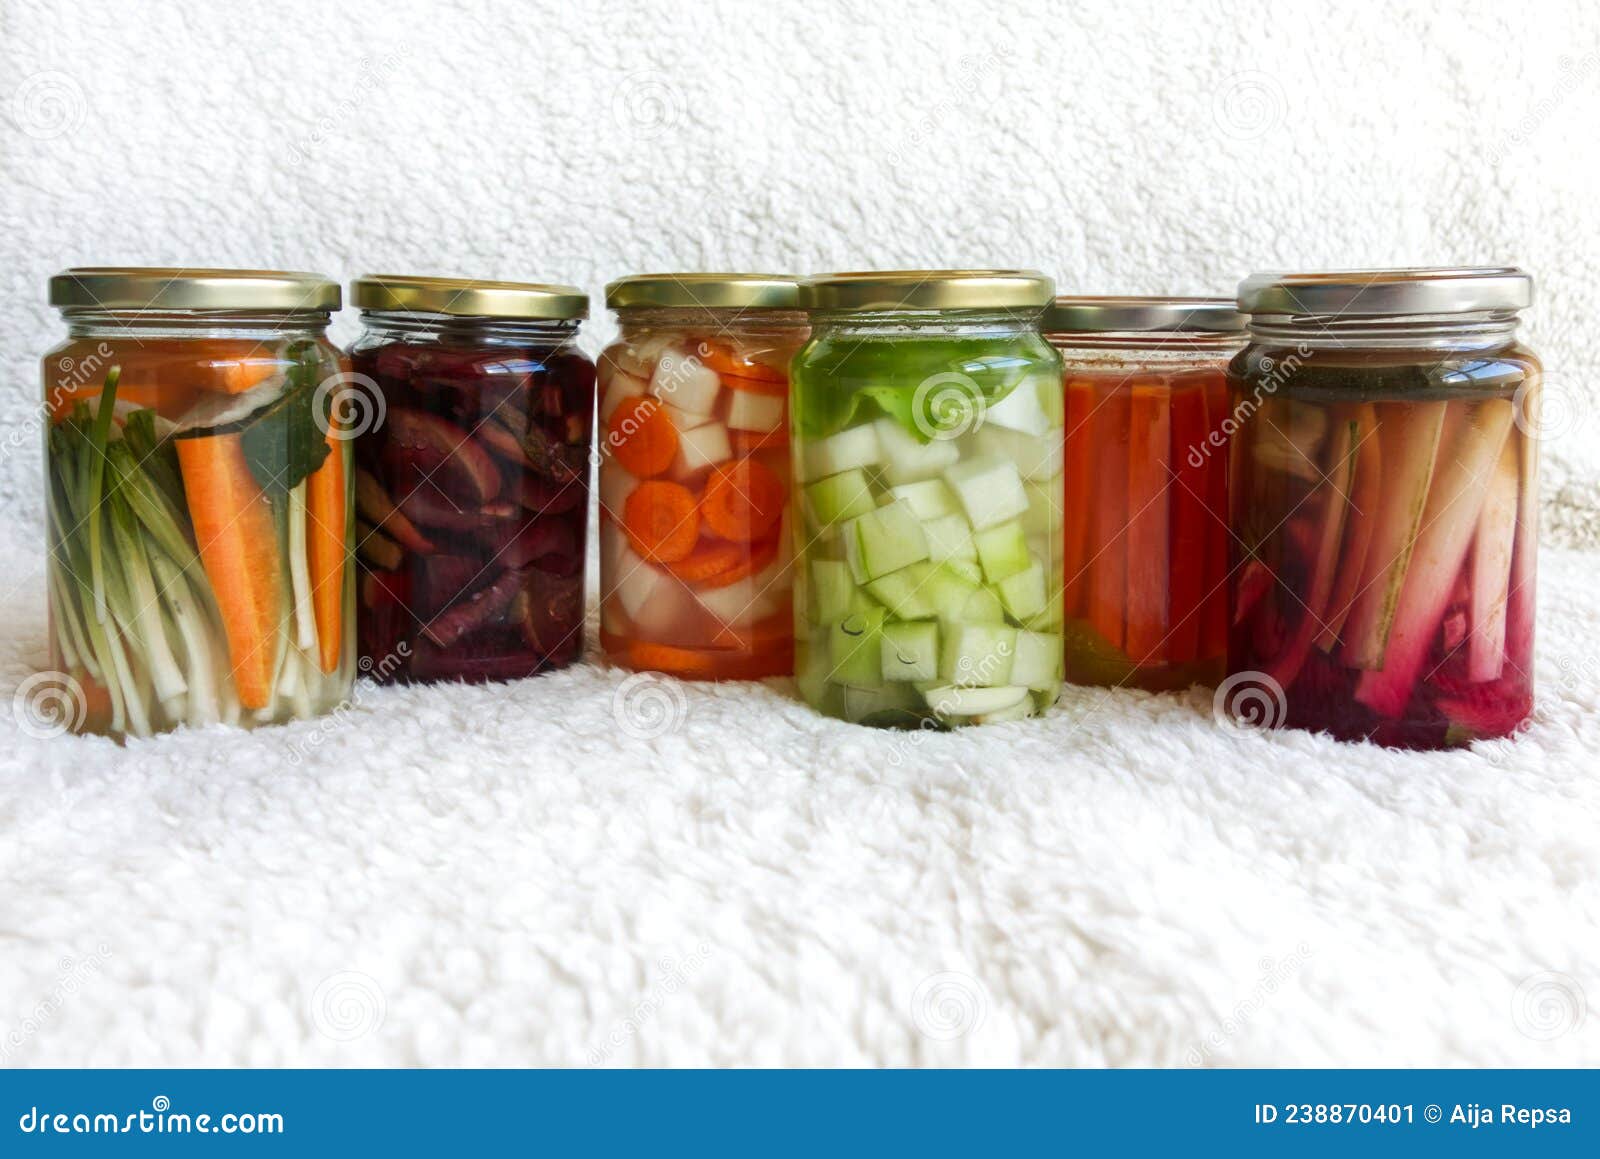 varied fermented vegetable jars on white background